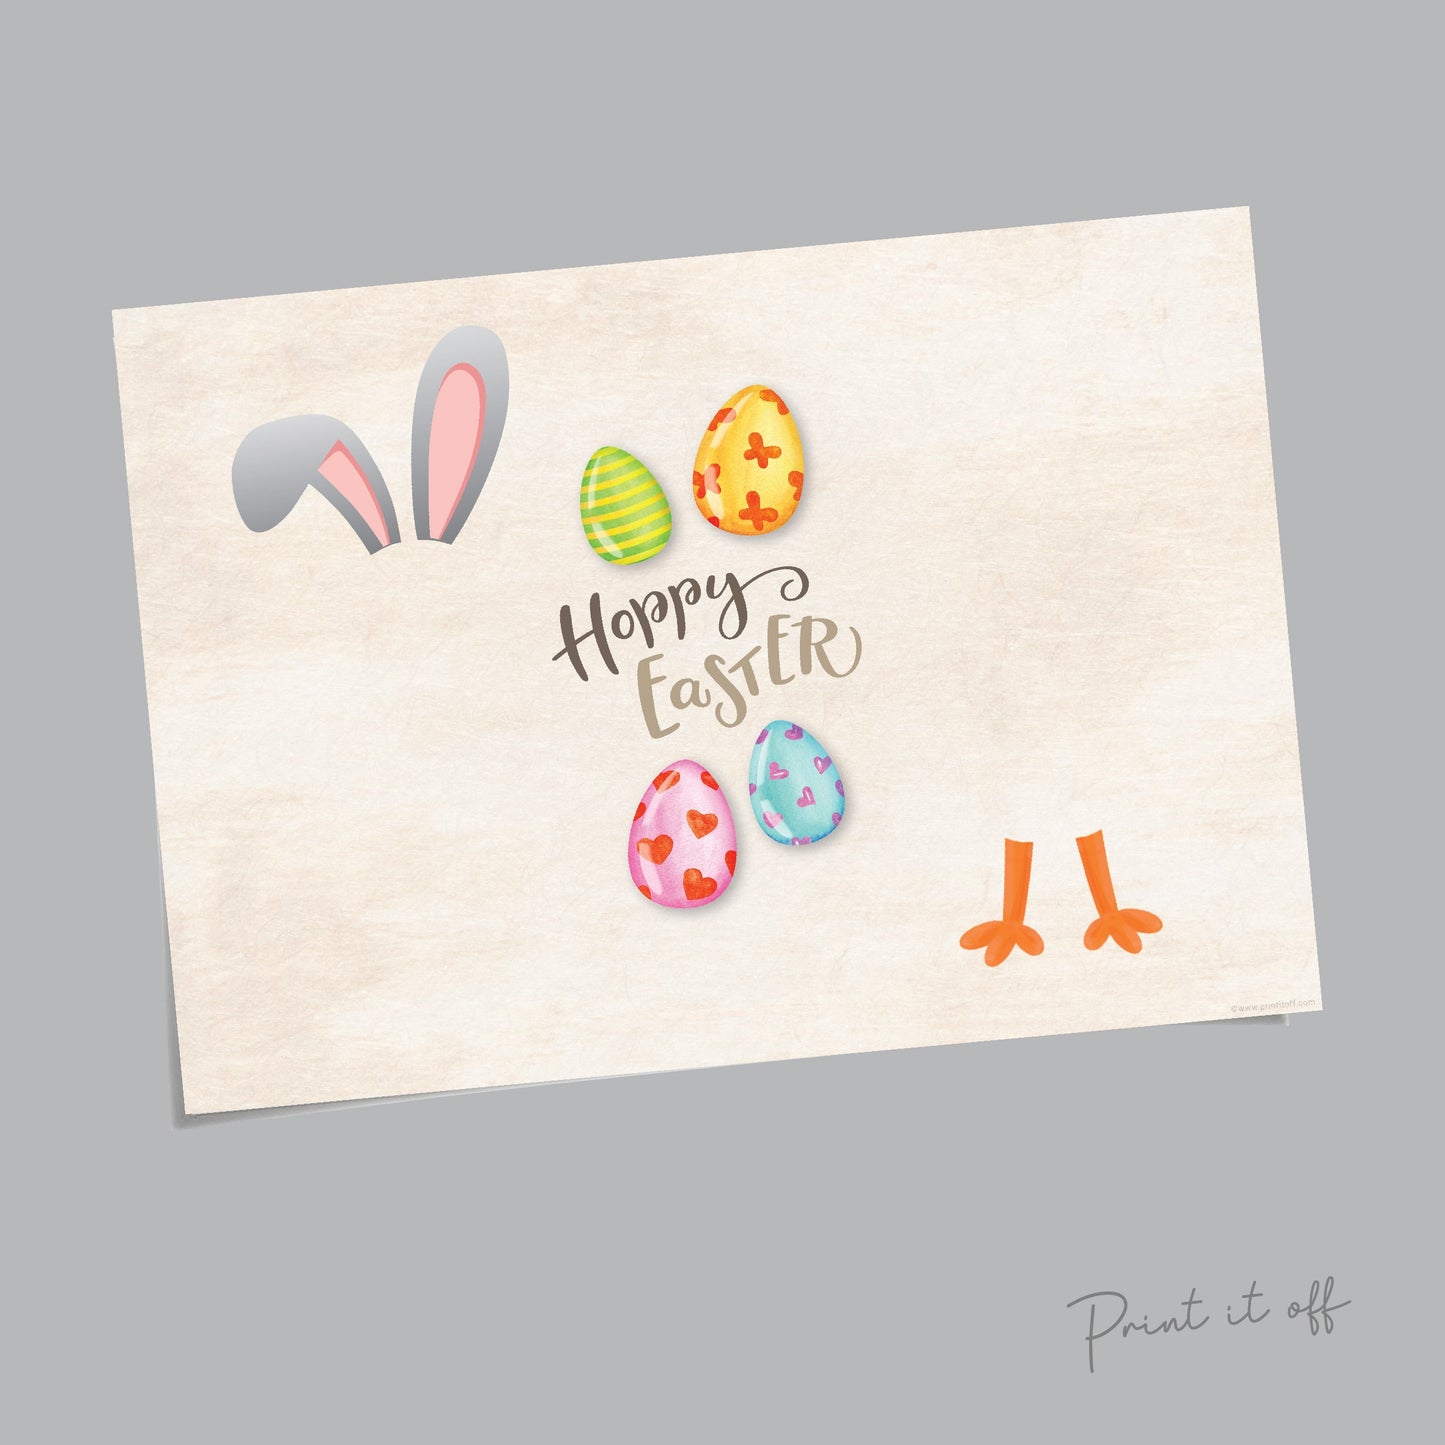 Bunny Chick / Footprint Handprint Hand Foot Art Craft / Hoppy Happy Easter / Kids Baby Toddler / Keepsake DIY Card / Print It Off